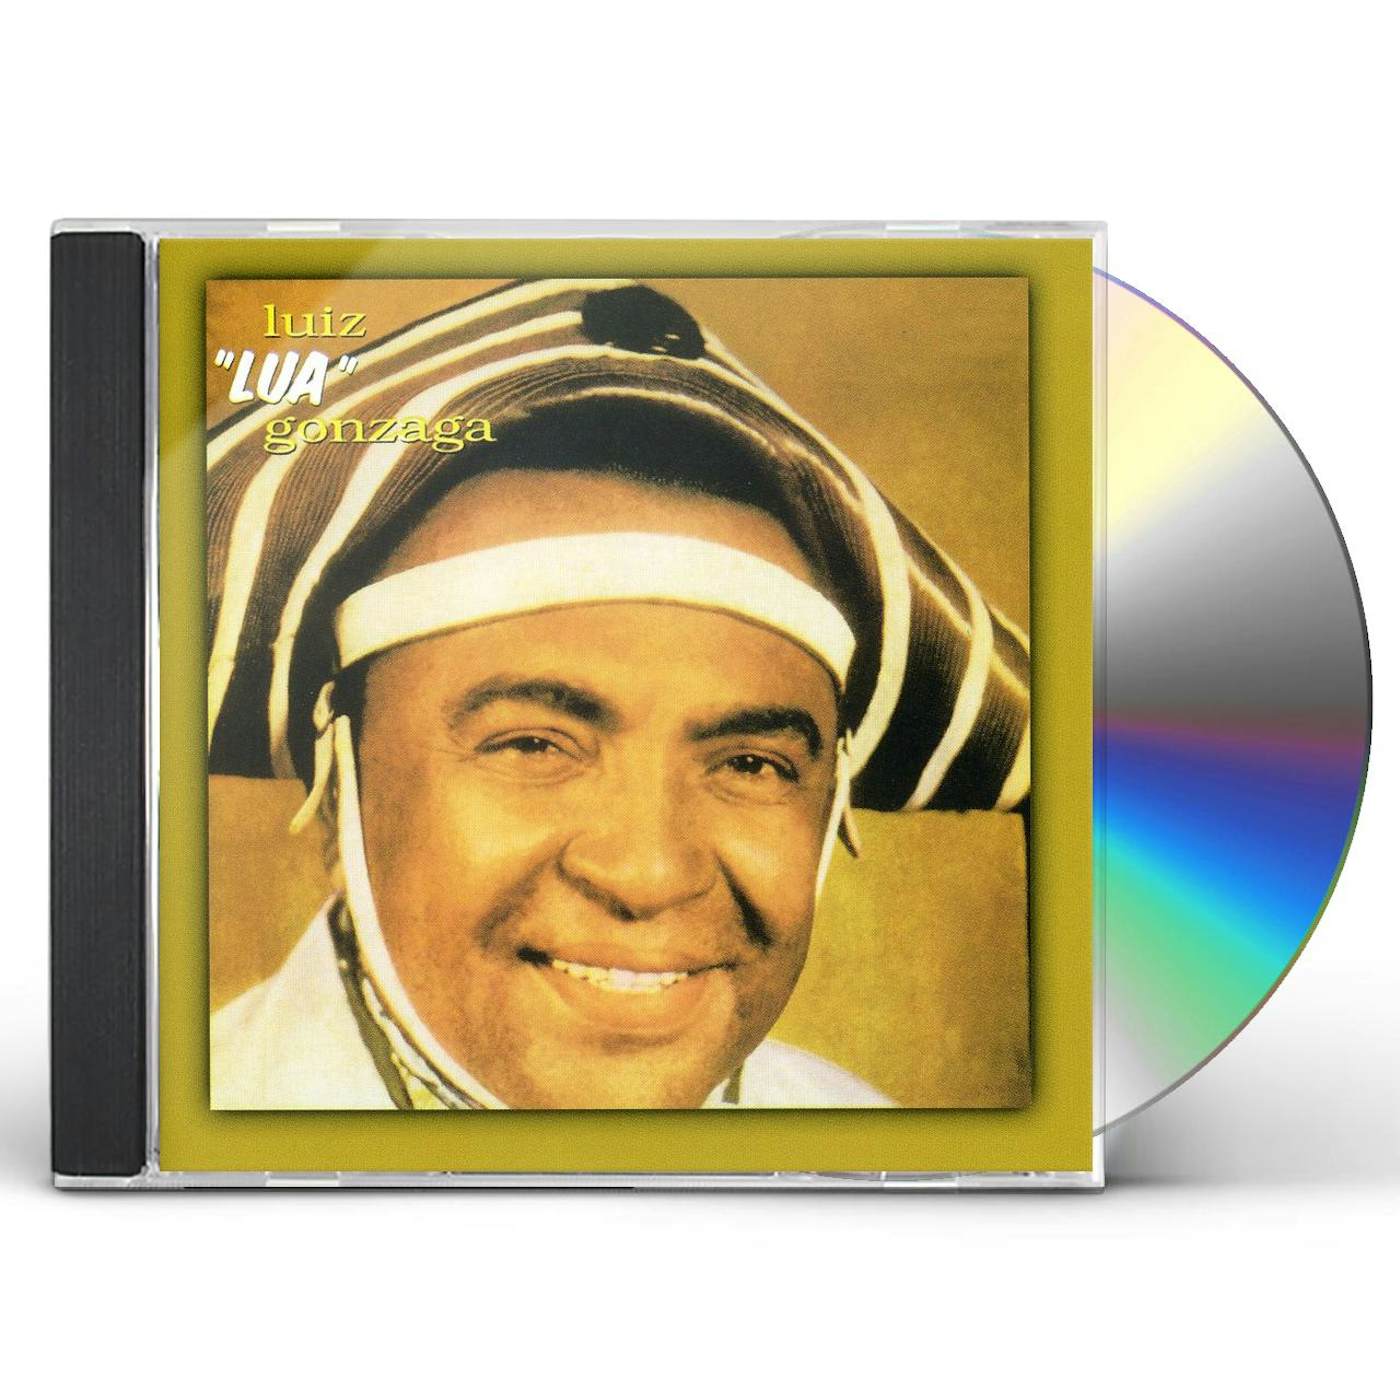 Luiz Gonzaga LUIZ LUA GONZAGA CD